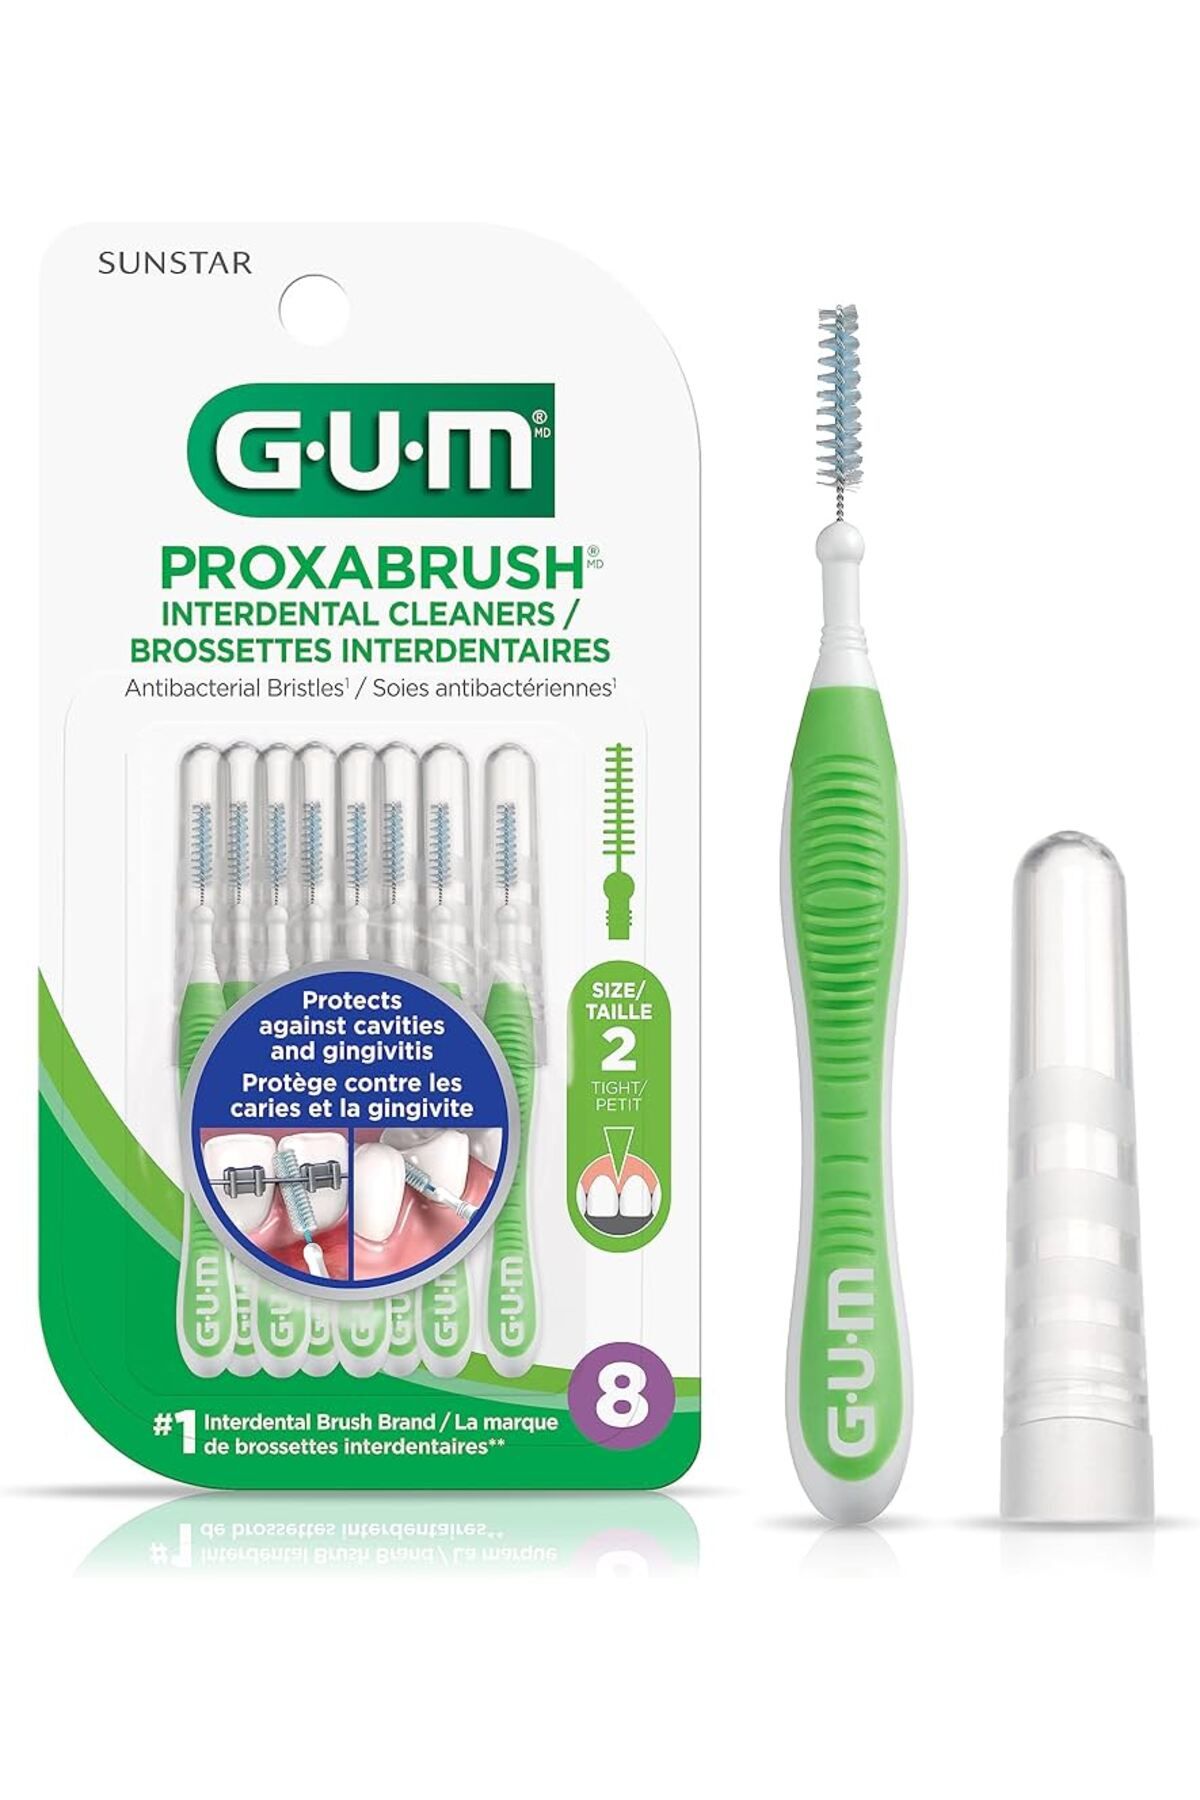 GUM Proxabrush Interdental Cleaners Brossettes Size Taılle 2 Tıght/petıt Ara Yüz Fırçası 8 Adet